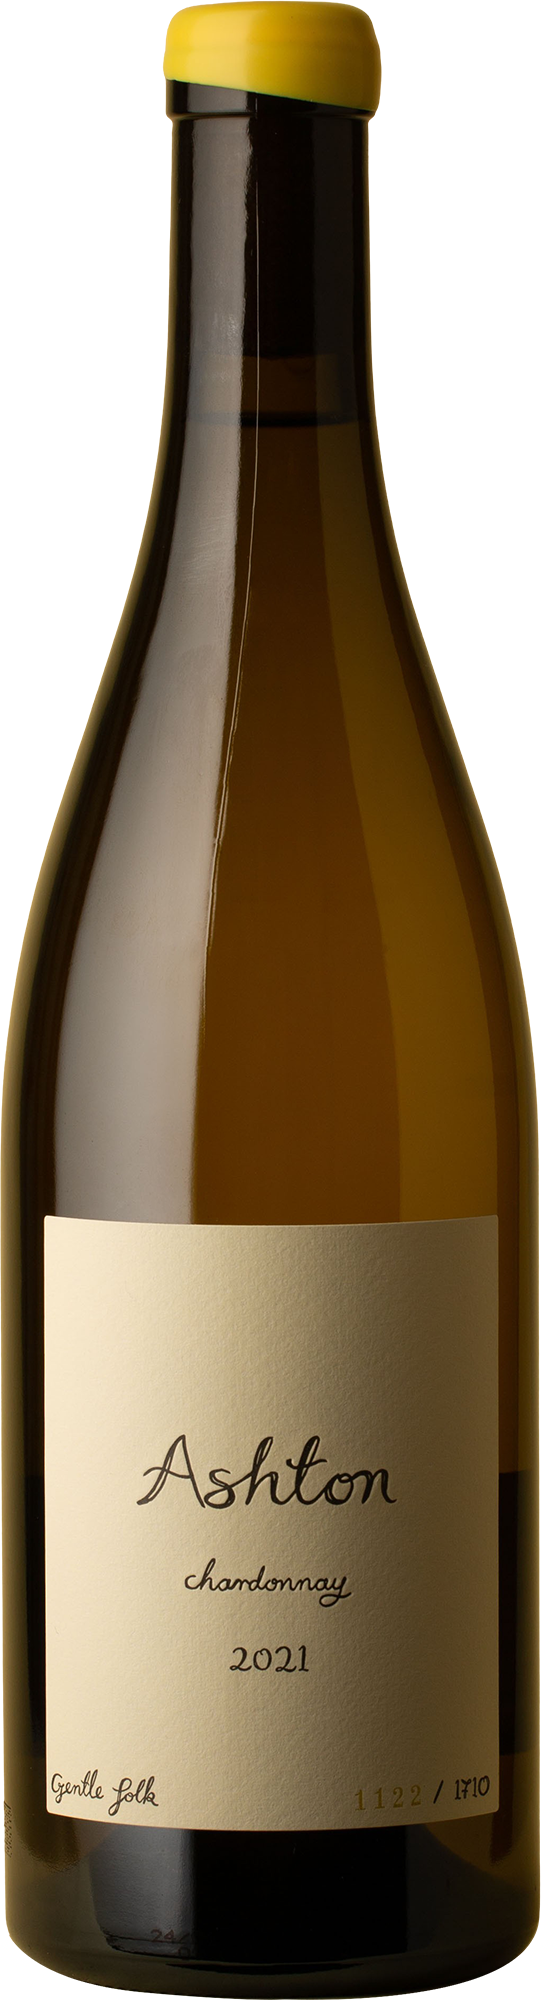 Gentle Folk - Ashton Chardonnay 2021 White Wine